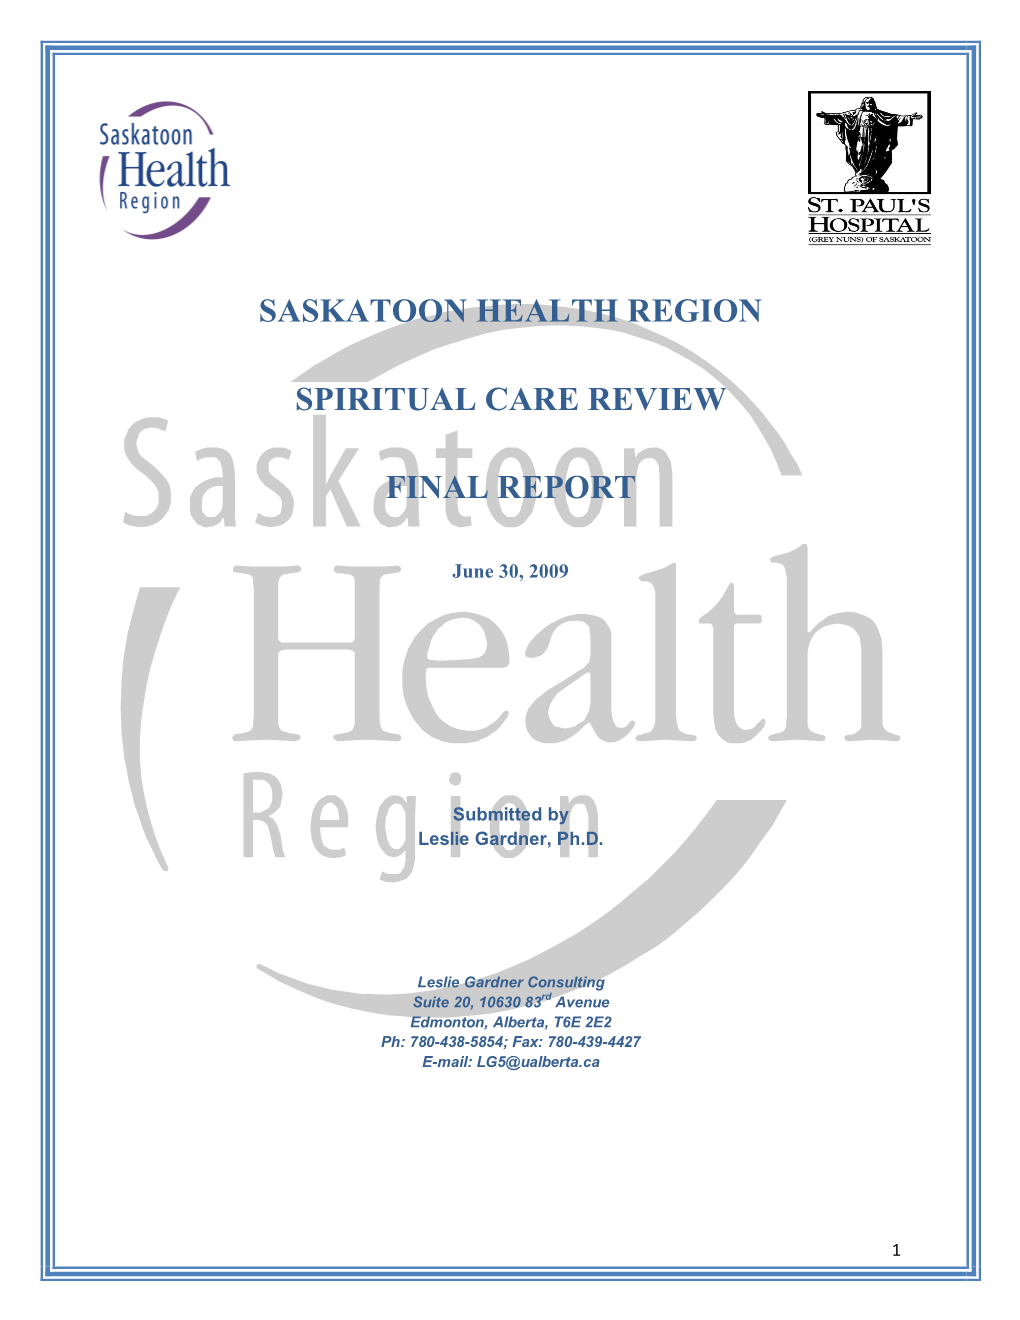 SASKATOON HEALTH REGION SPIRITUAL CARE REVIEW Final Report, June 30, 2009